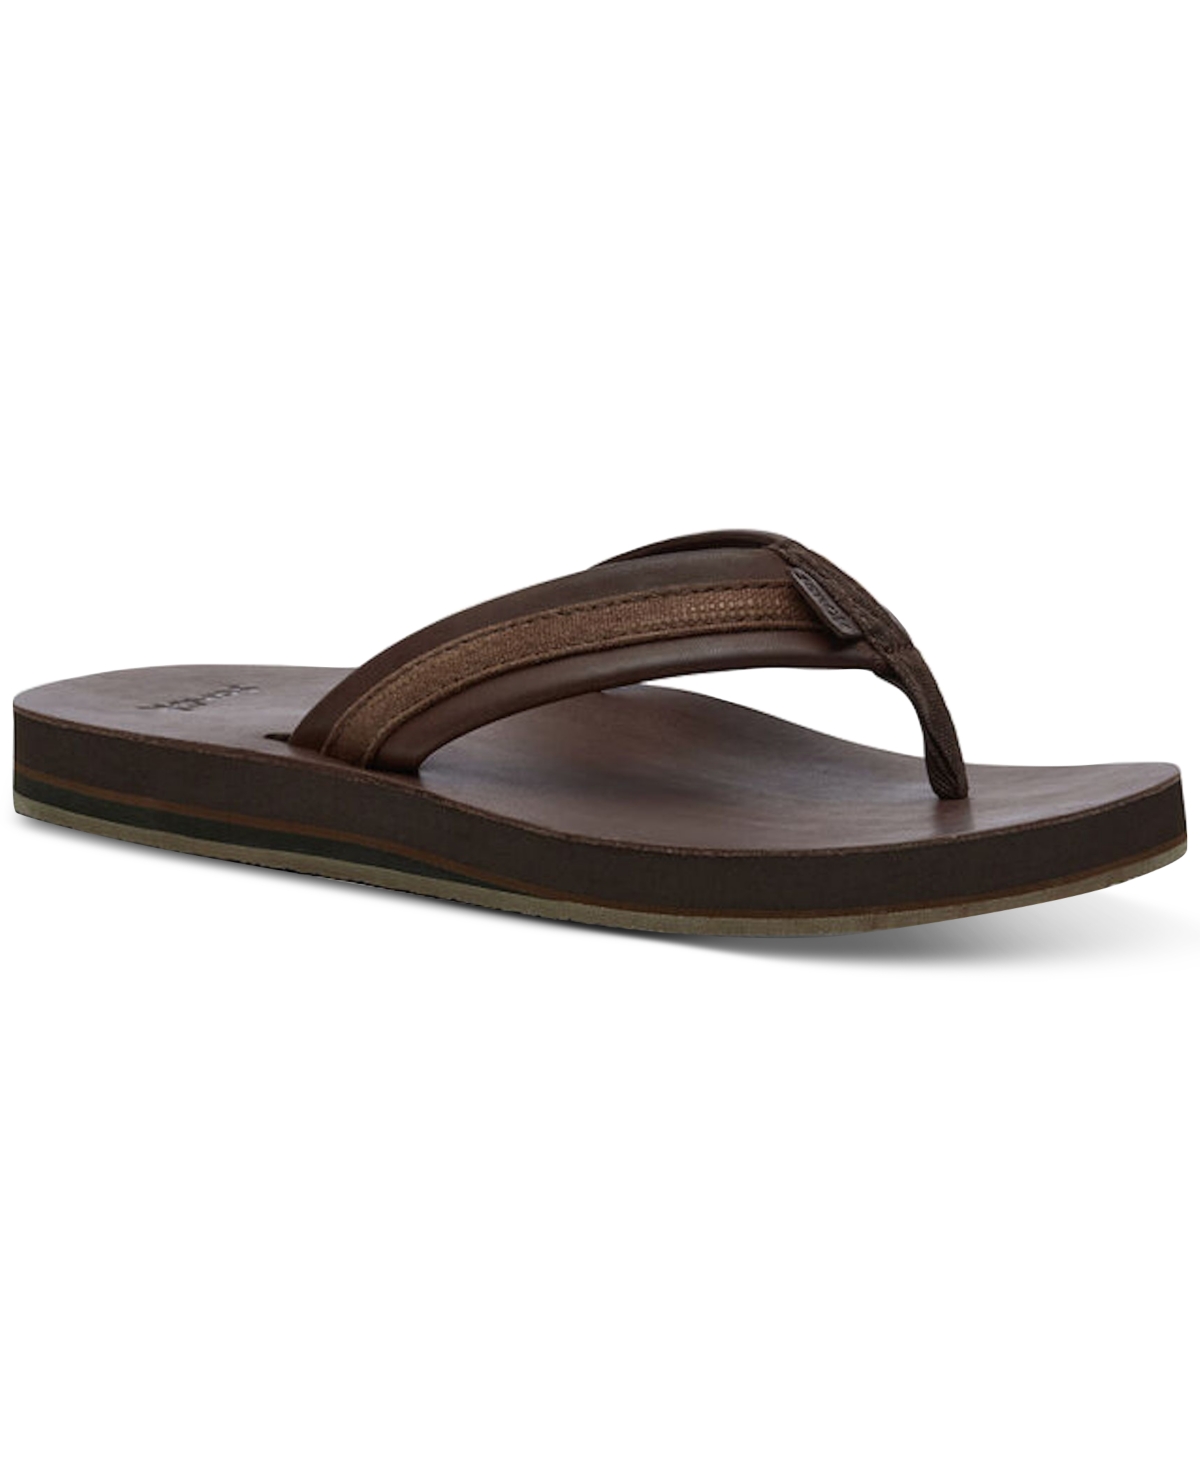 Men's Hullsome Leather Flip-Flop Sandals - Tan